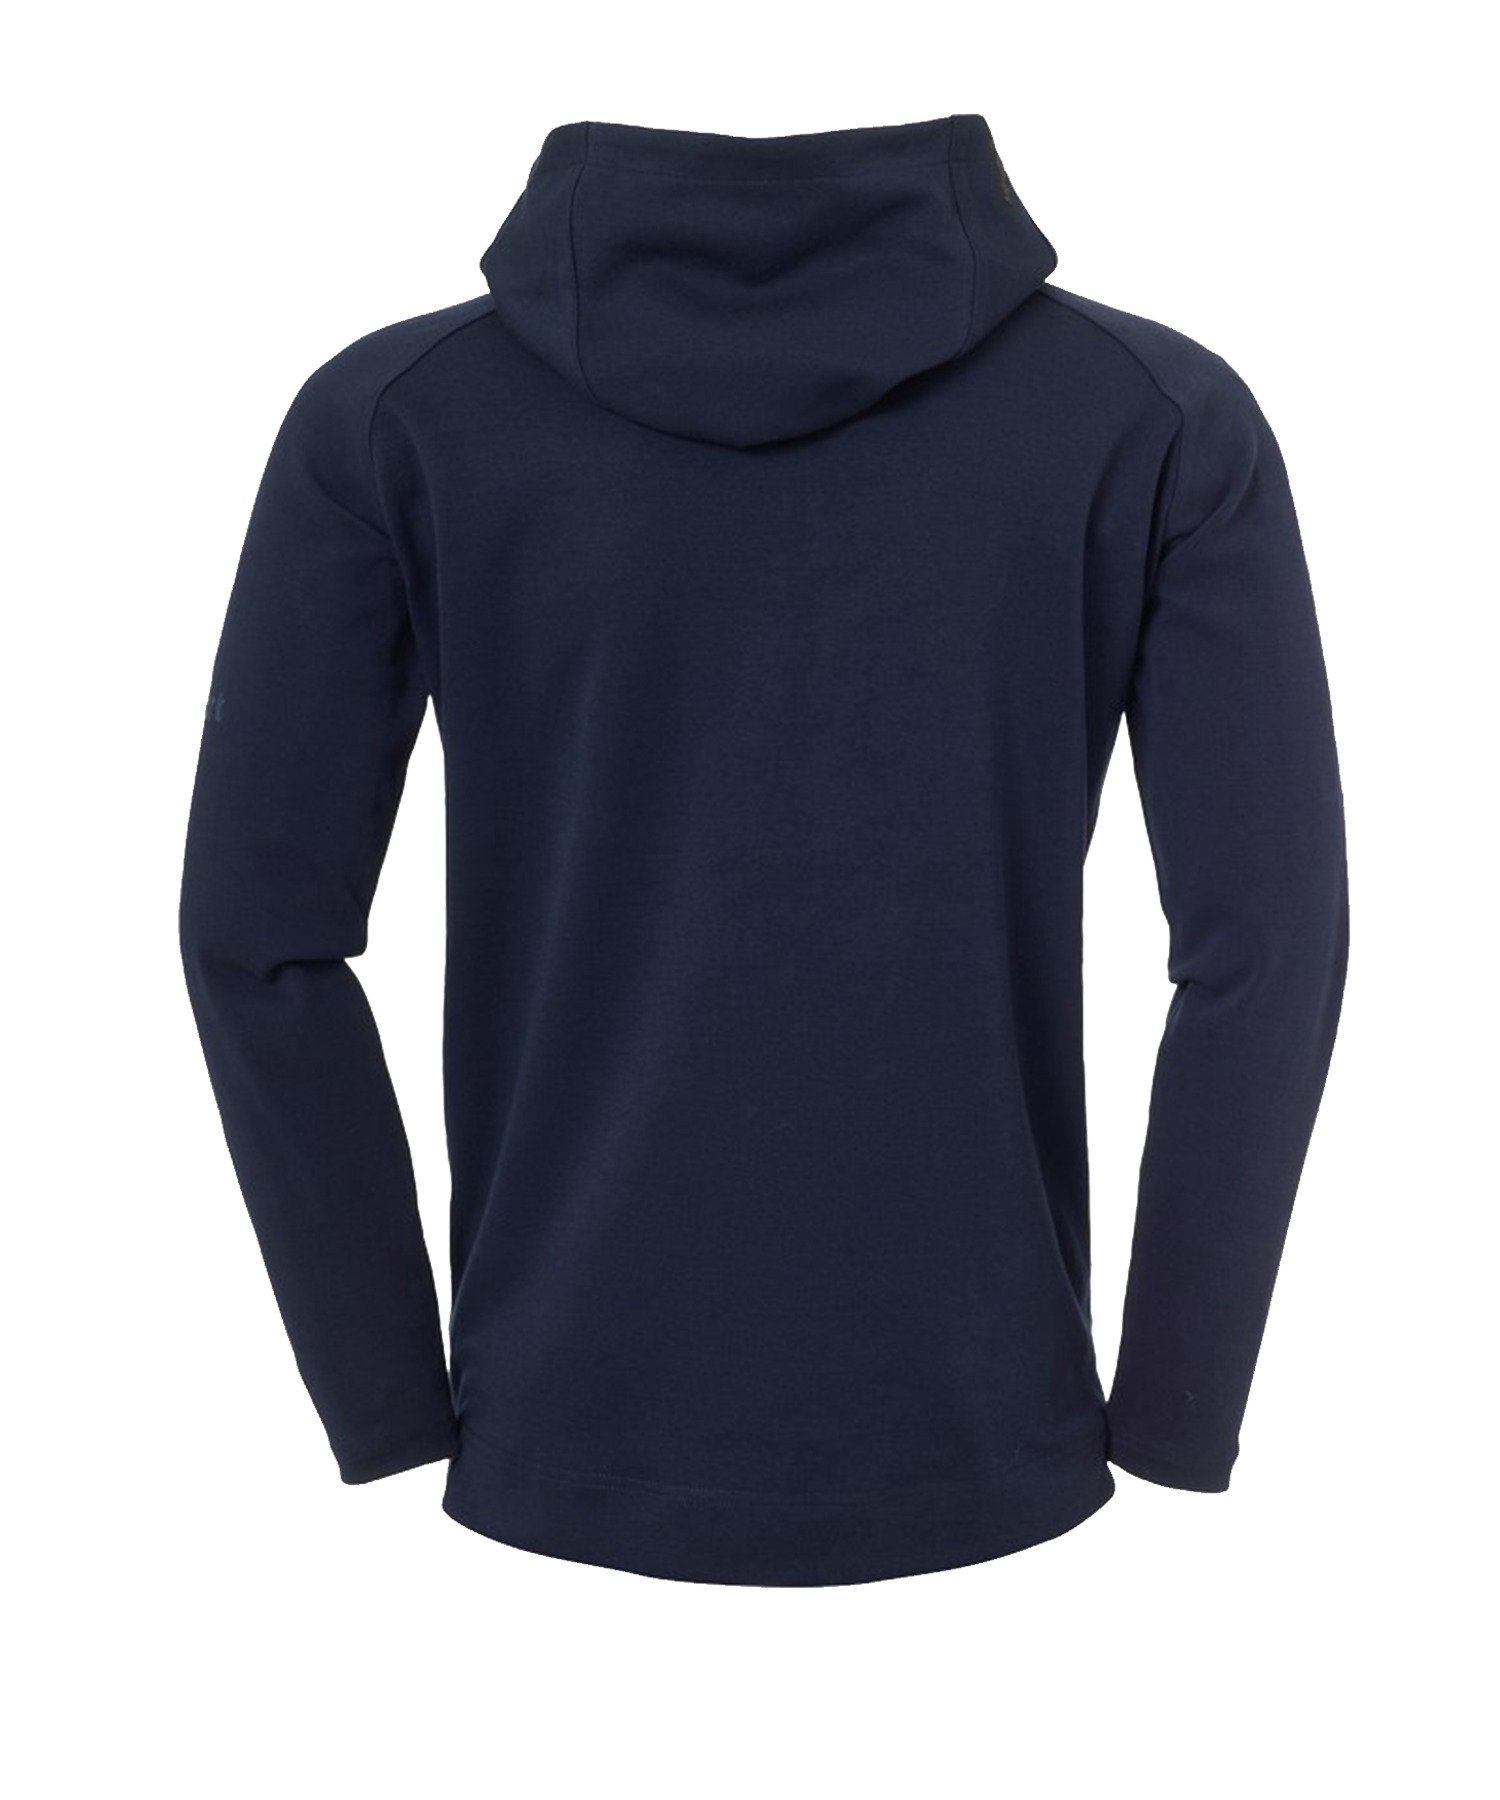 Ziptop Blau Pro uhlsport Essential Sweatshirt